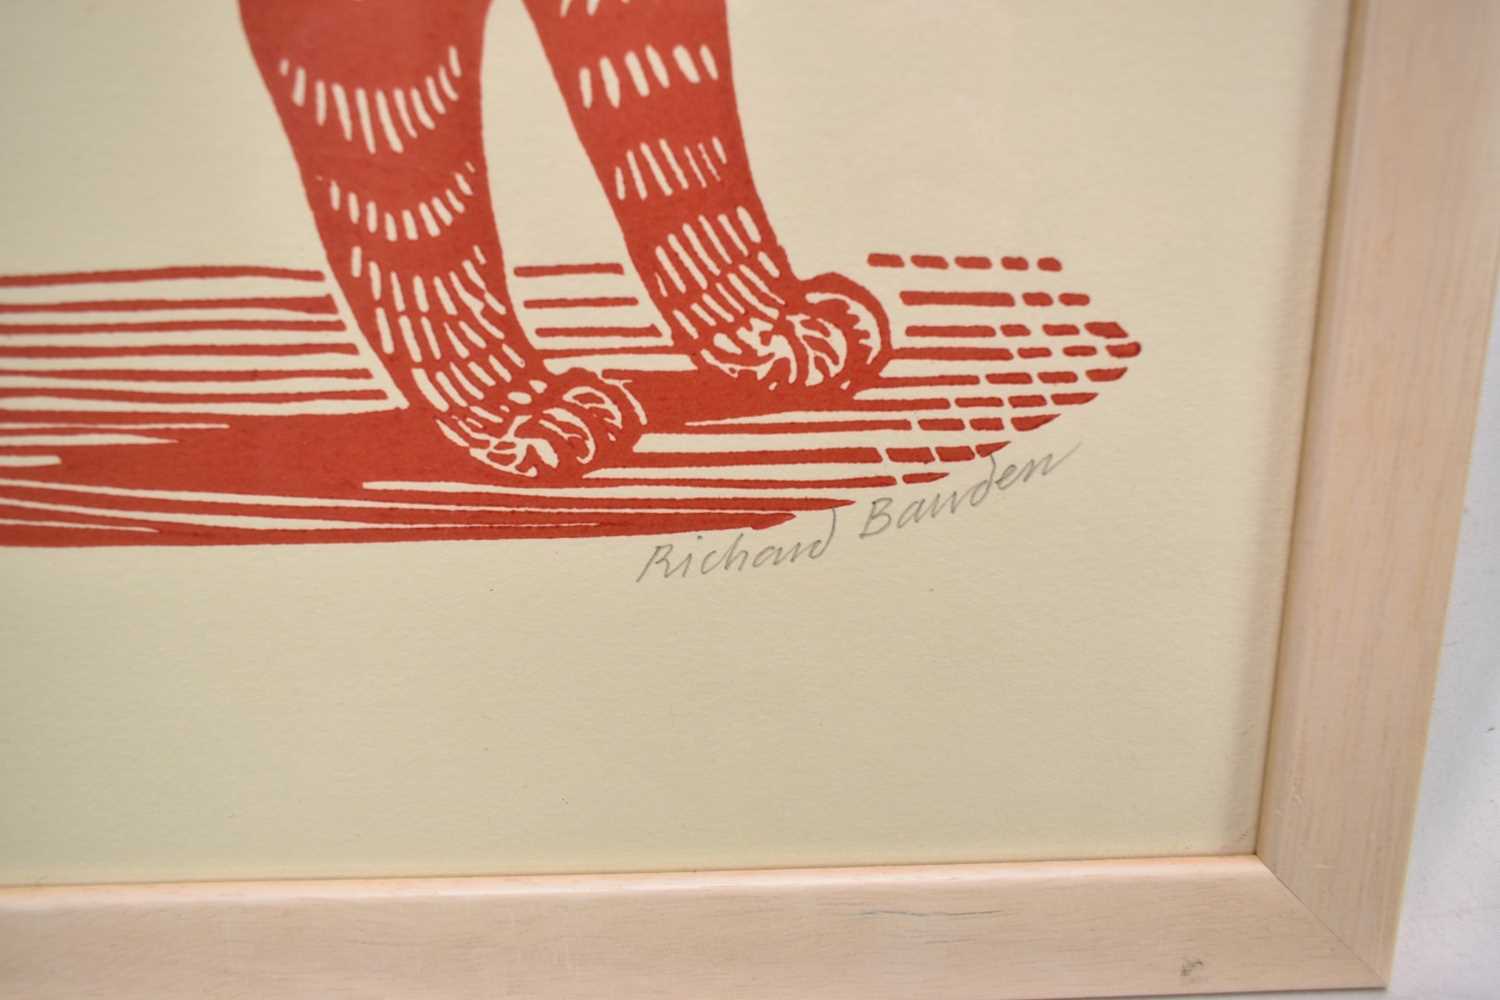 *Richard Bawden (b.1936), signed limited edition linocut - 'Sasha on a Skateboard' 27/85, 27cm x 34. - Image 2 of 4